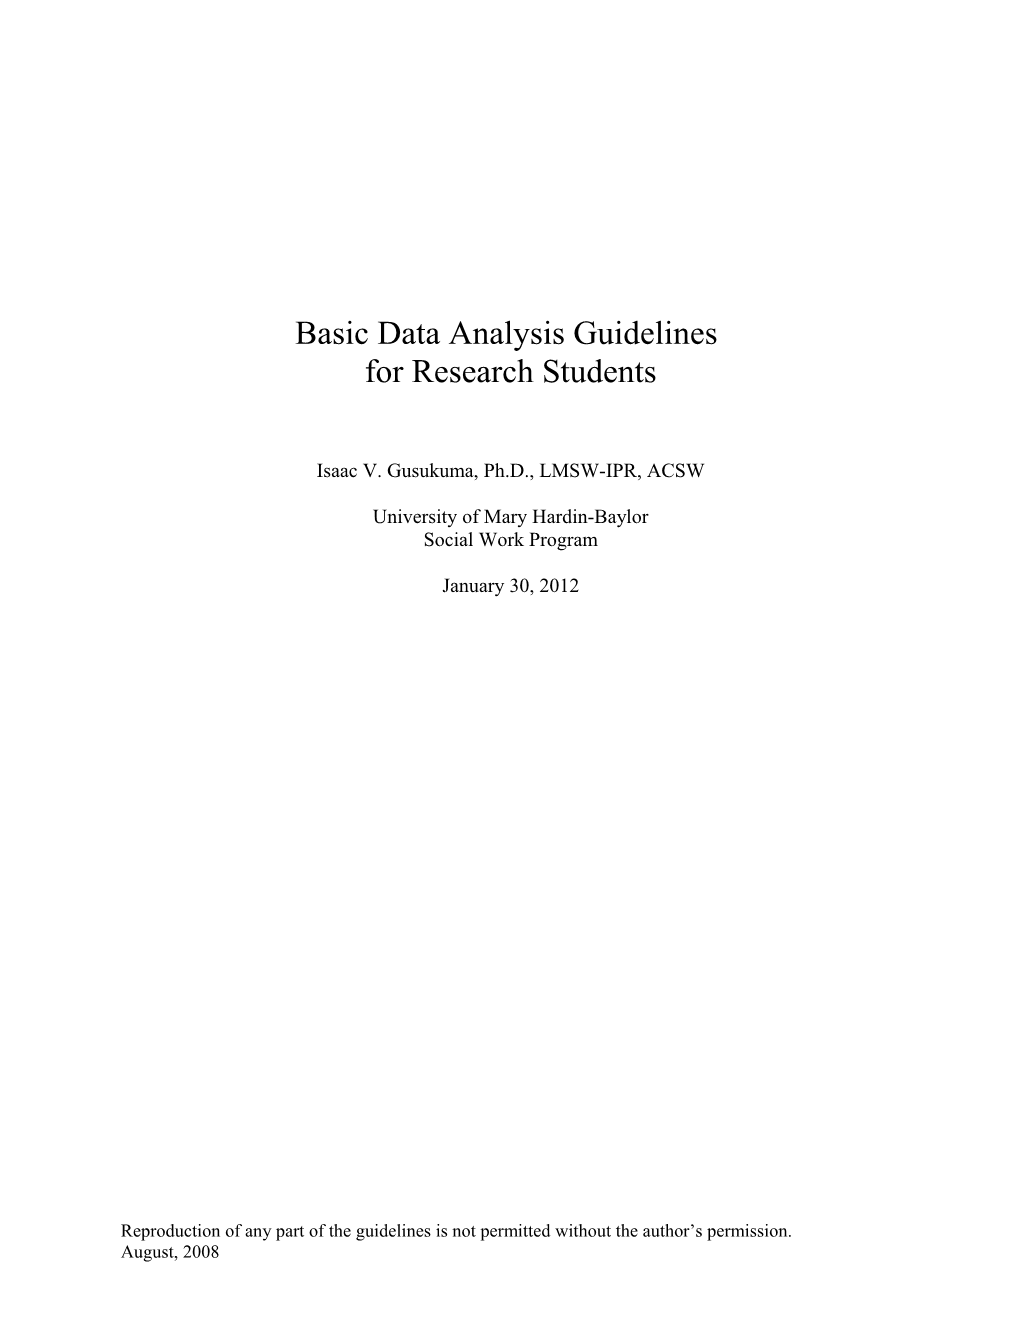 Data Analysis Guidelines